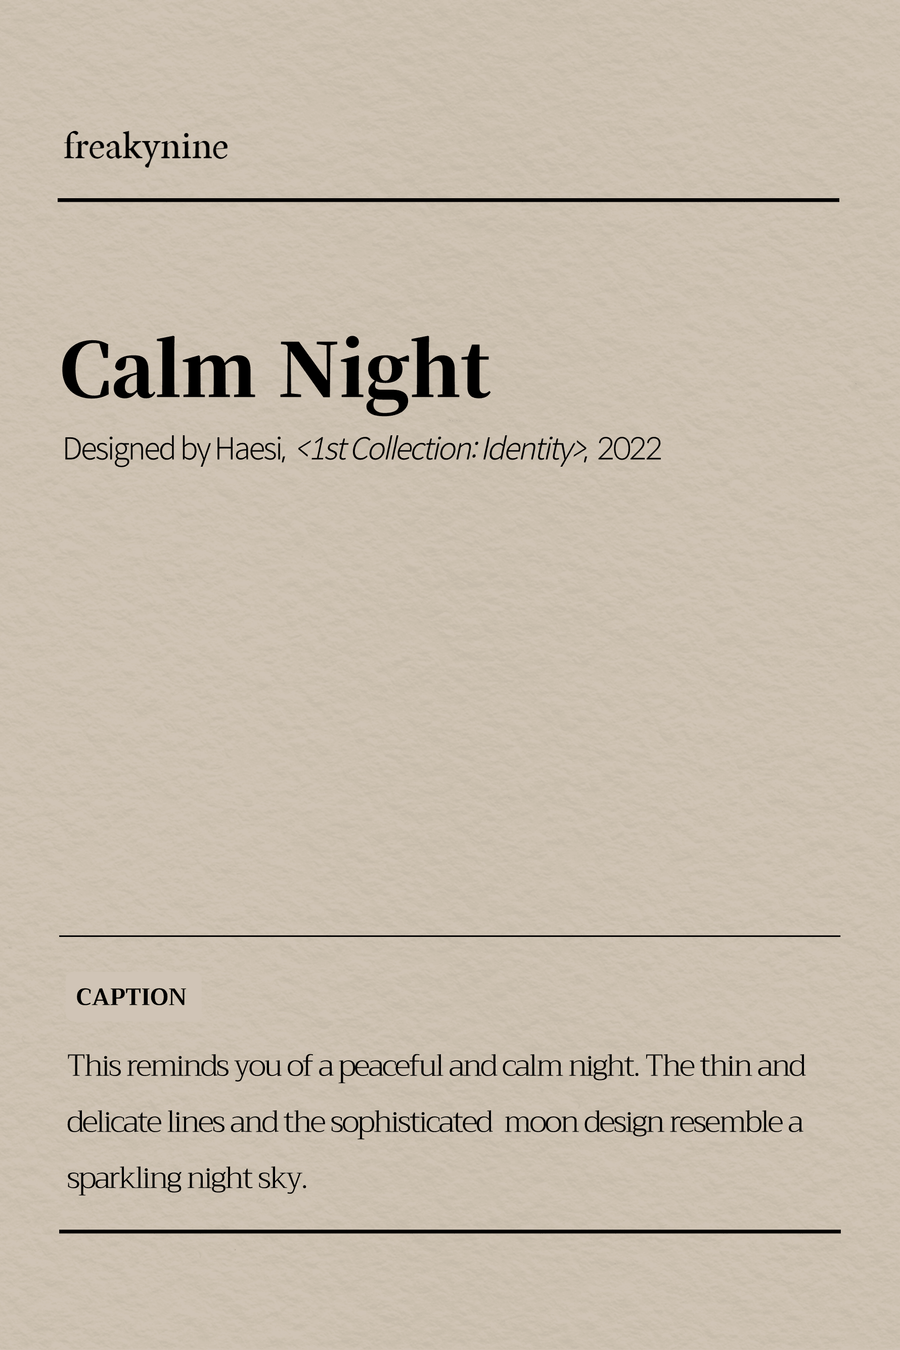 (Haesi) Calm Night (2EA) - freakynine